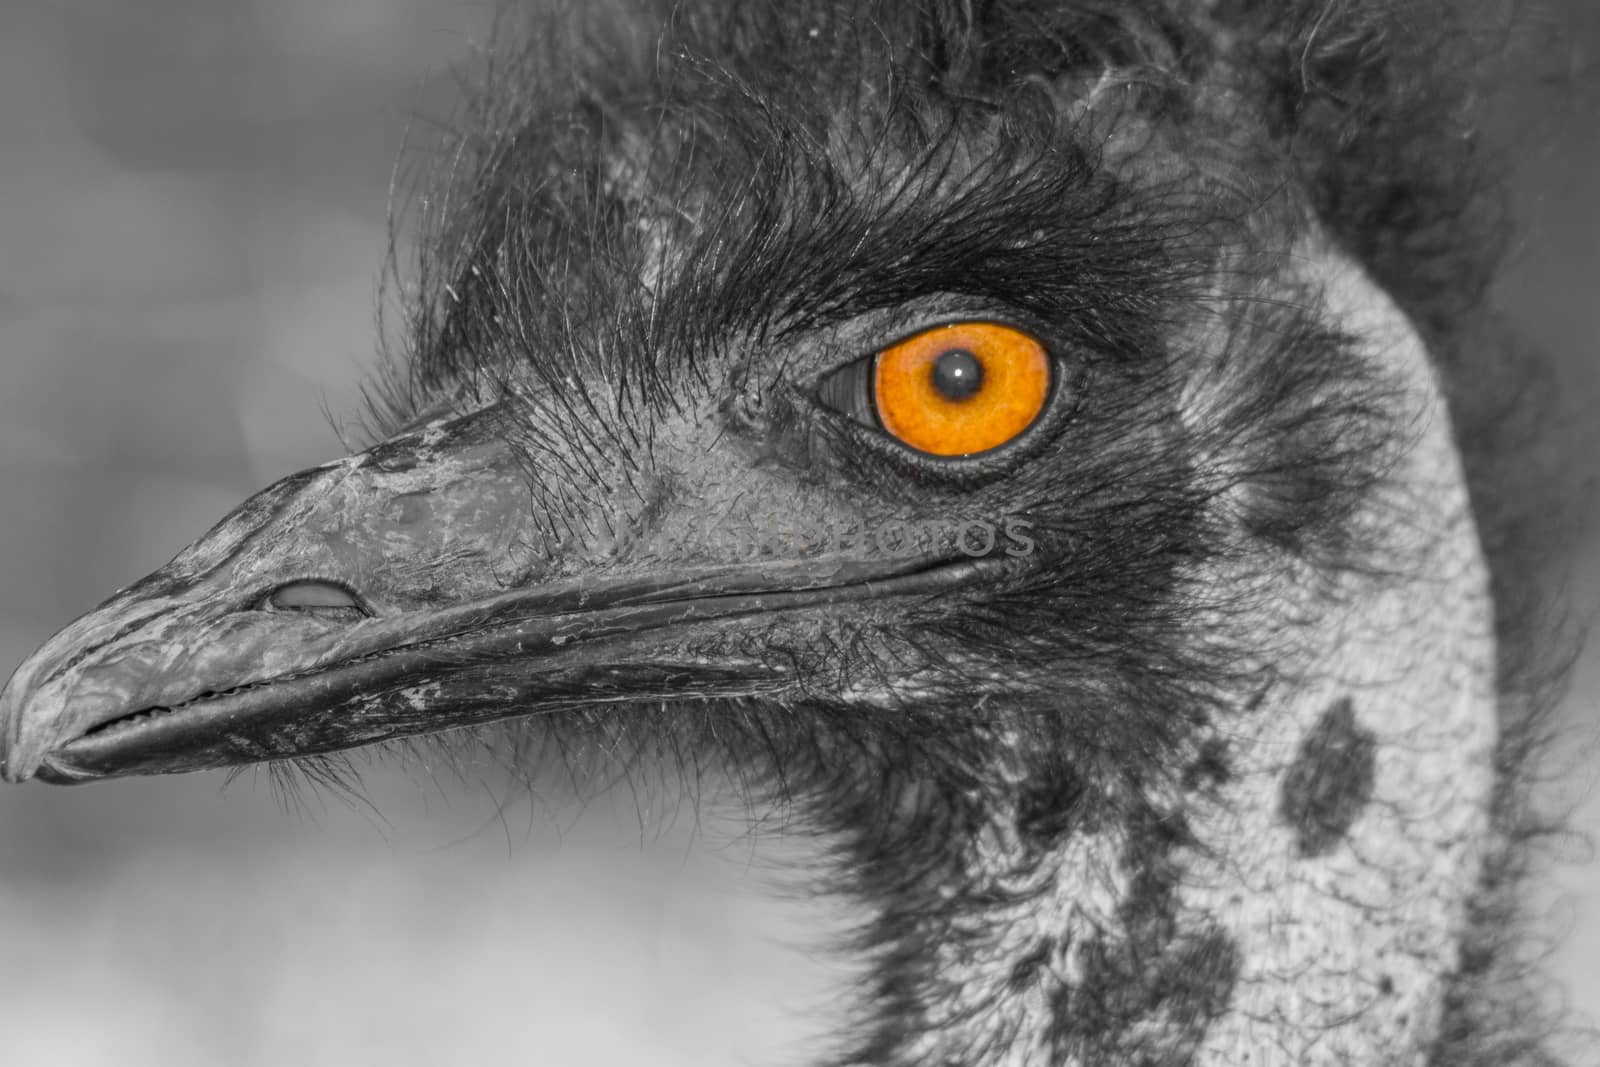 Ostrich eye by robertboss